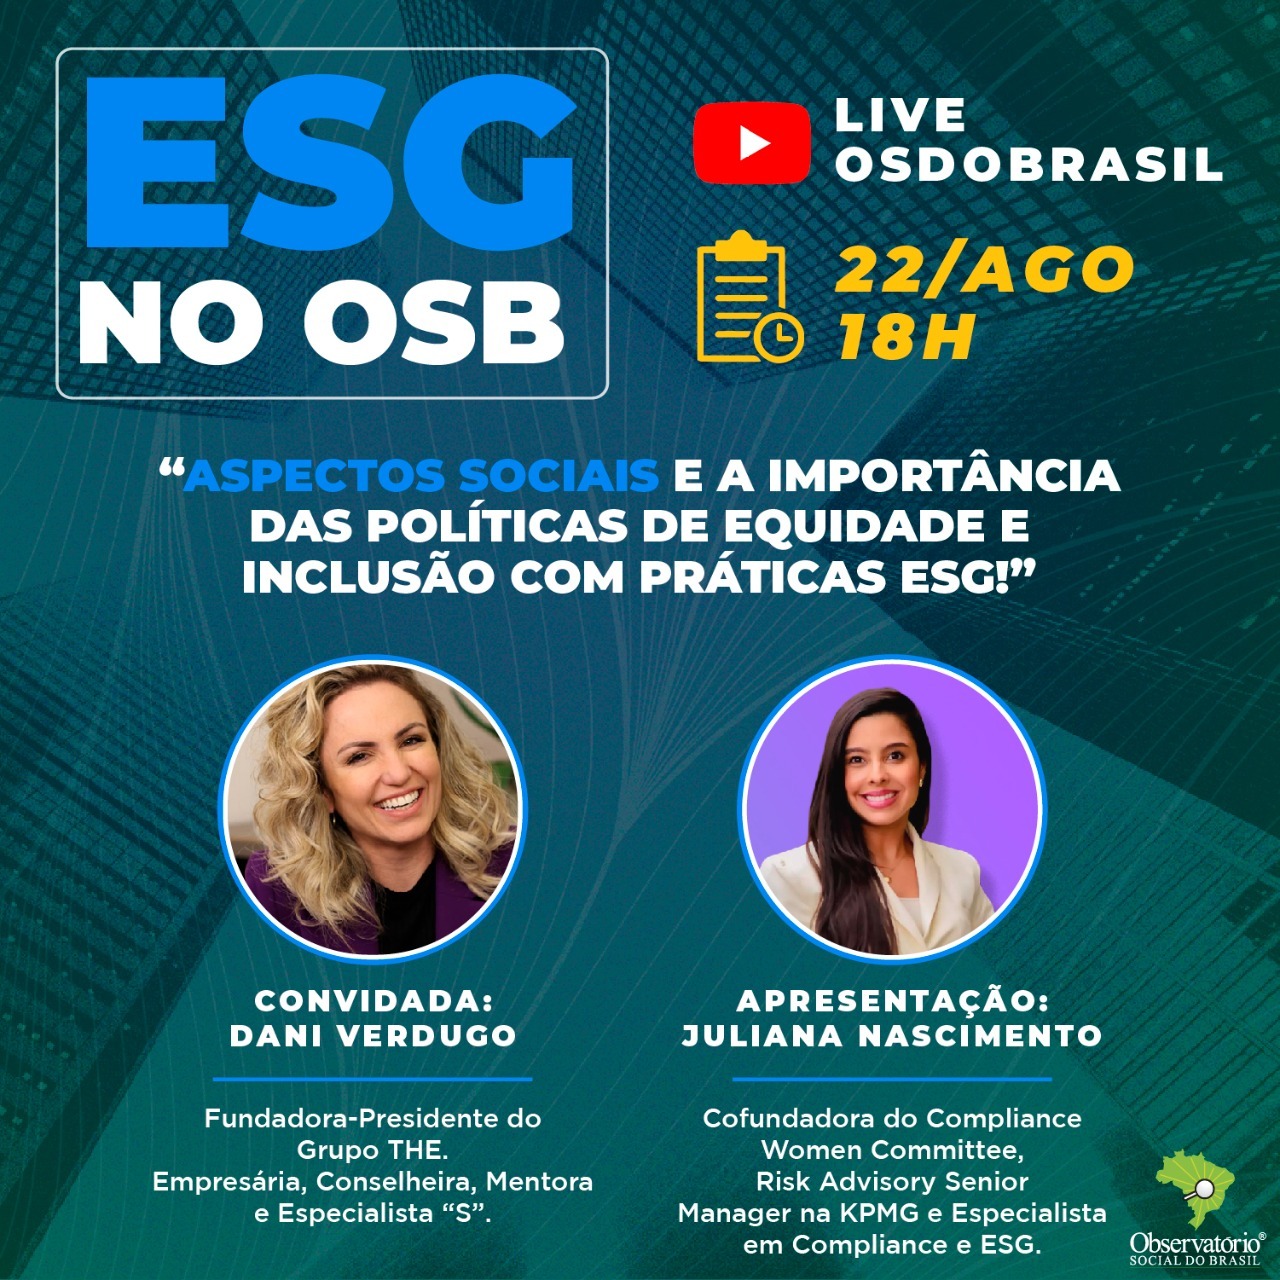 Últimas edições, Prêmio Compliance ESG Brasil 2022